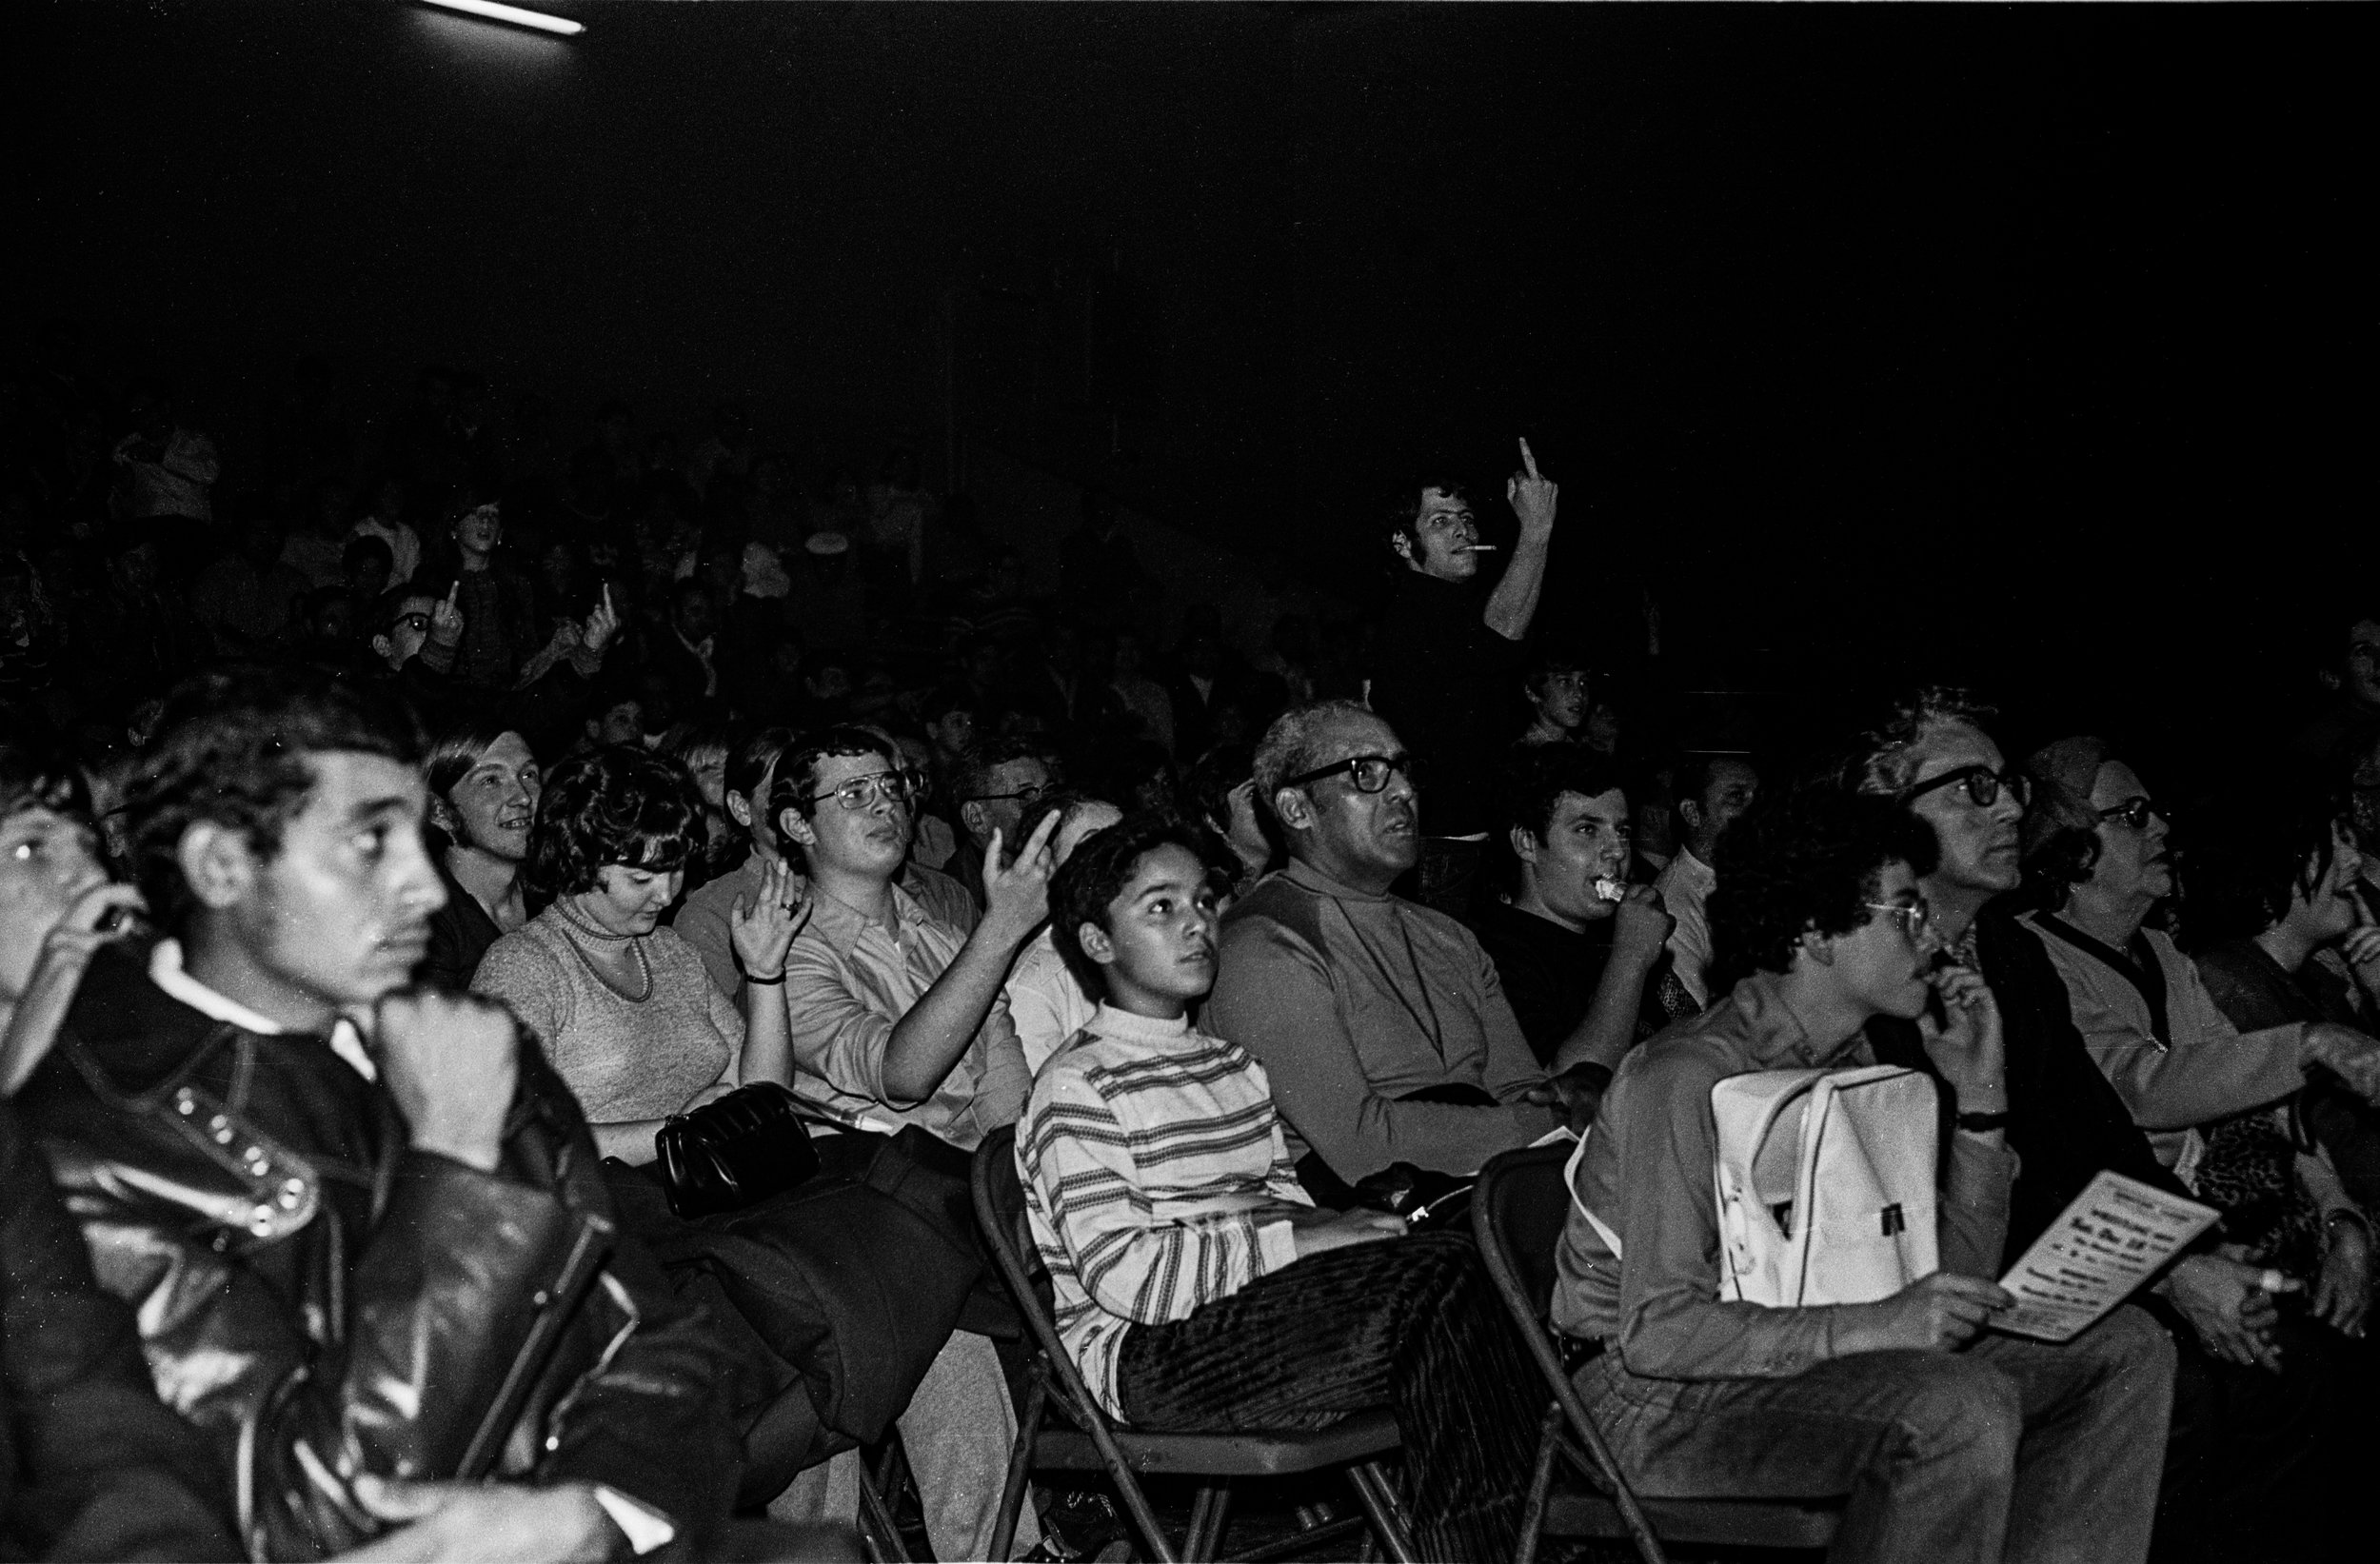   Arena Crowd, Sunnyside Queens, 1971  